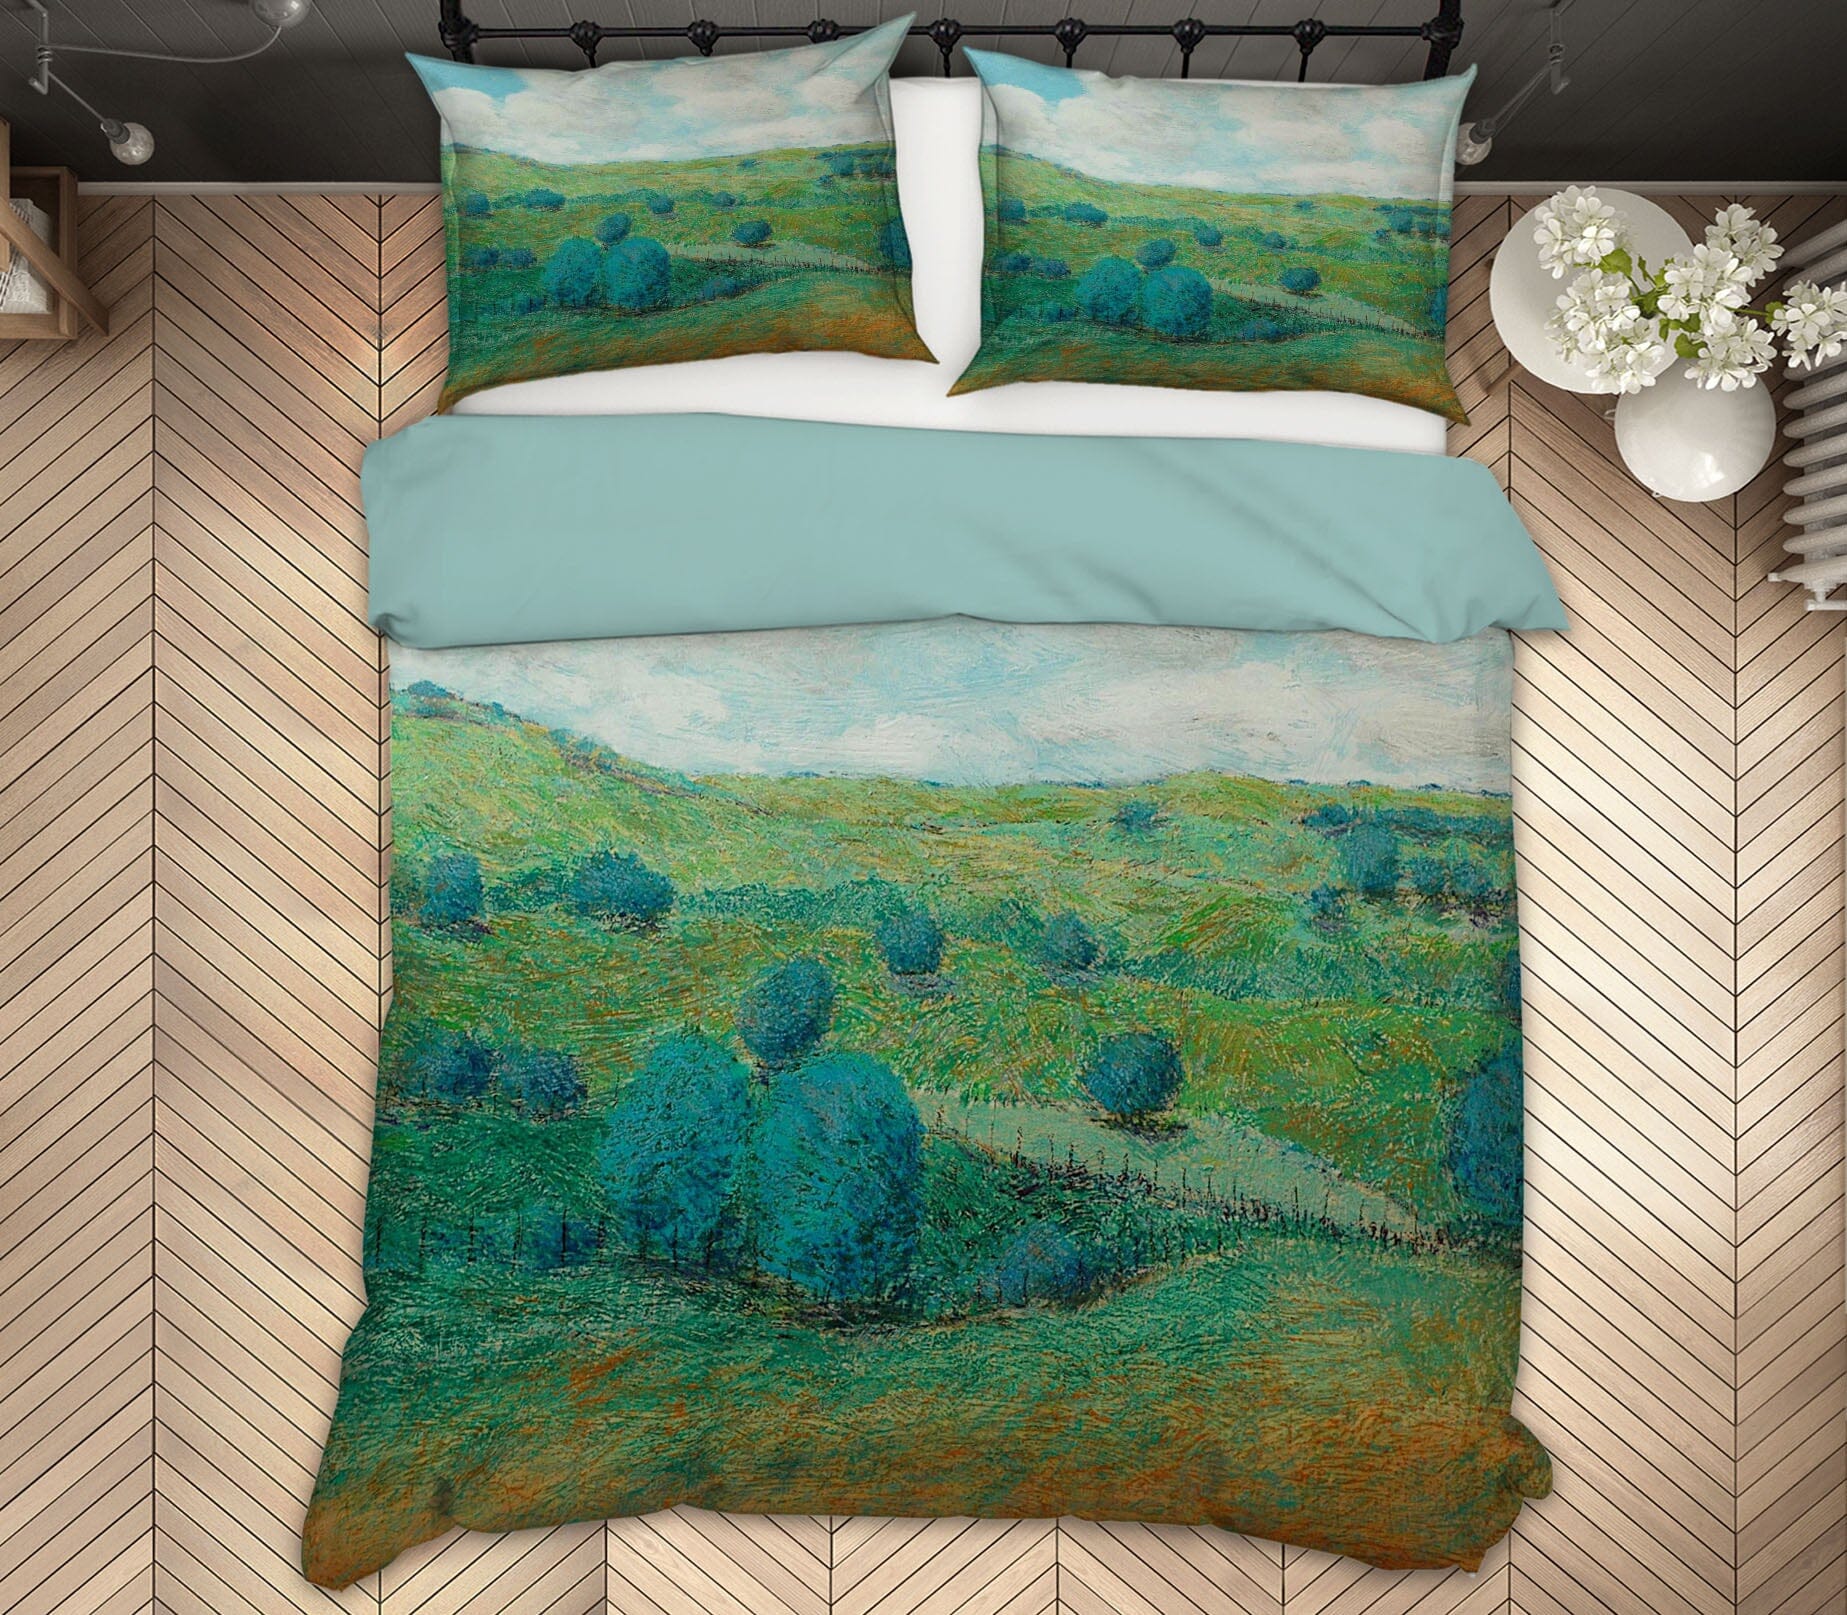 3D Dry Hills 2111 Allan P. Friedlander Bedding Bed Pillowcases Quilt Quiet Covers AJ Creativity Home 